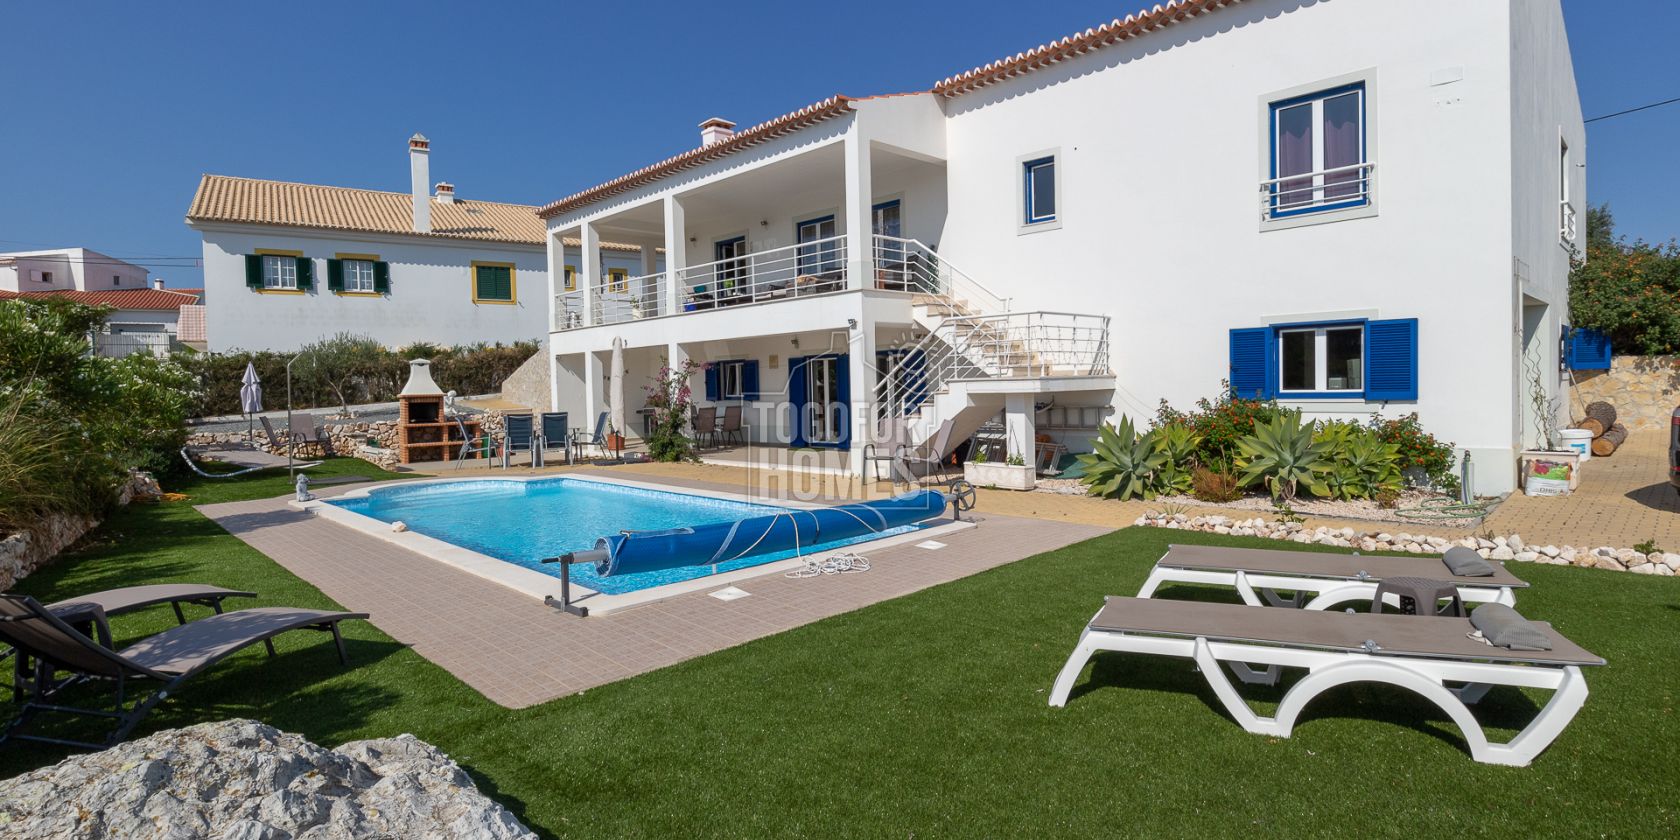 LG1178 - Modern 3 + 2 bedroom villa with garage and pool Vale da Telha, West Coast